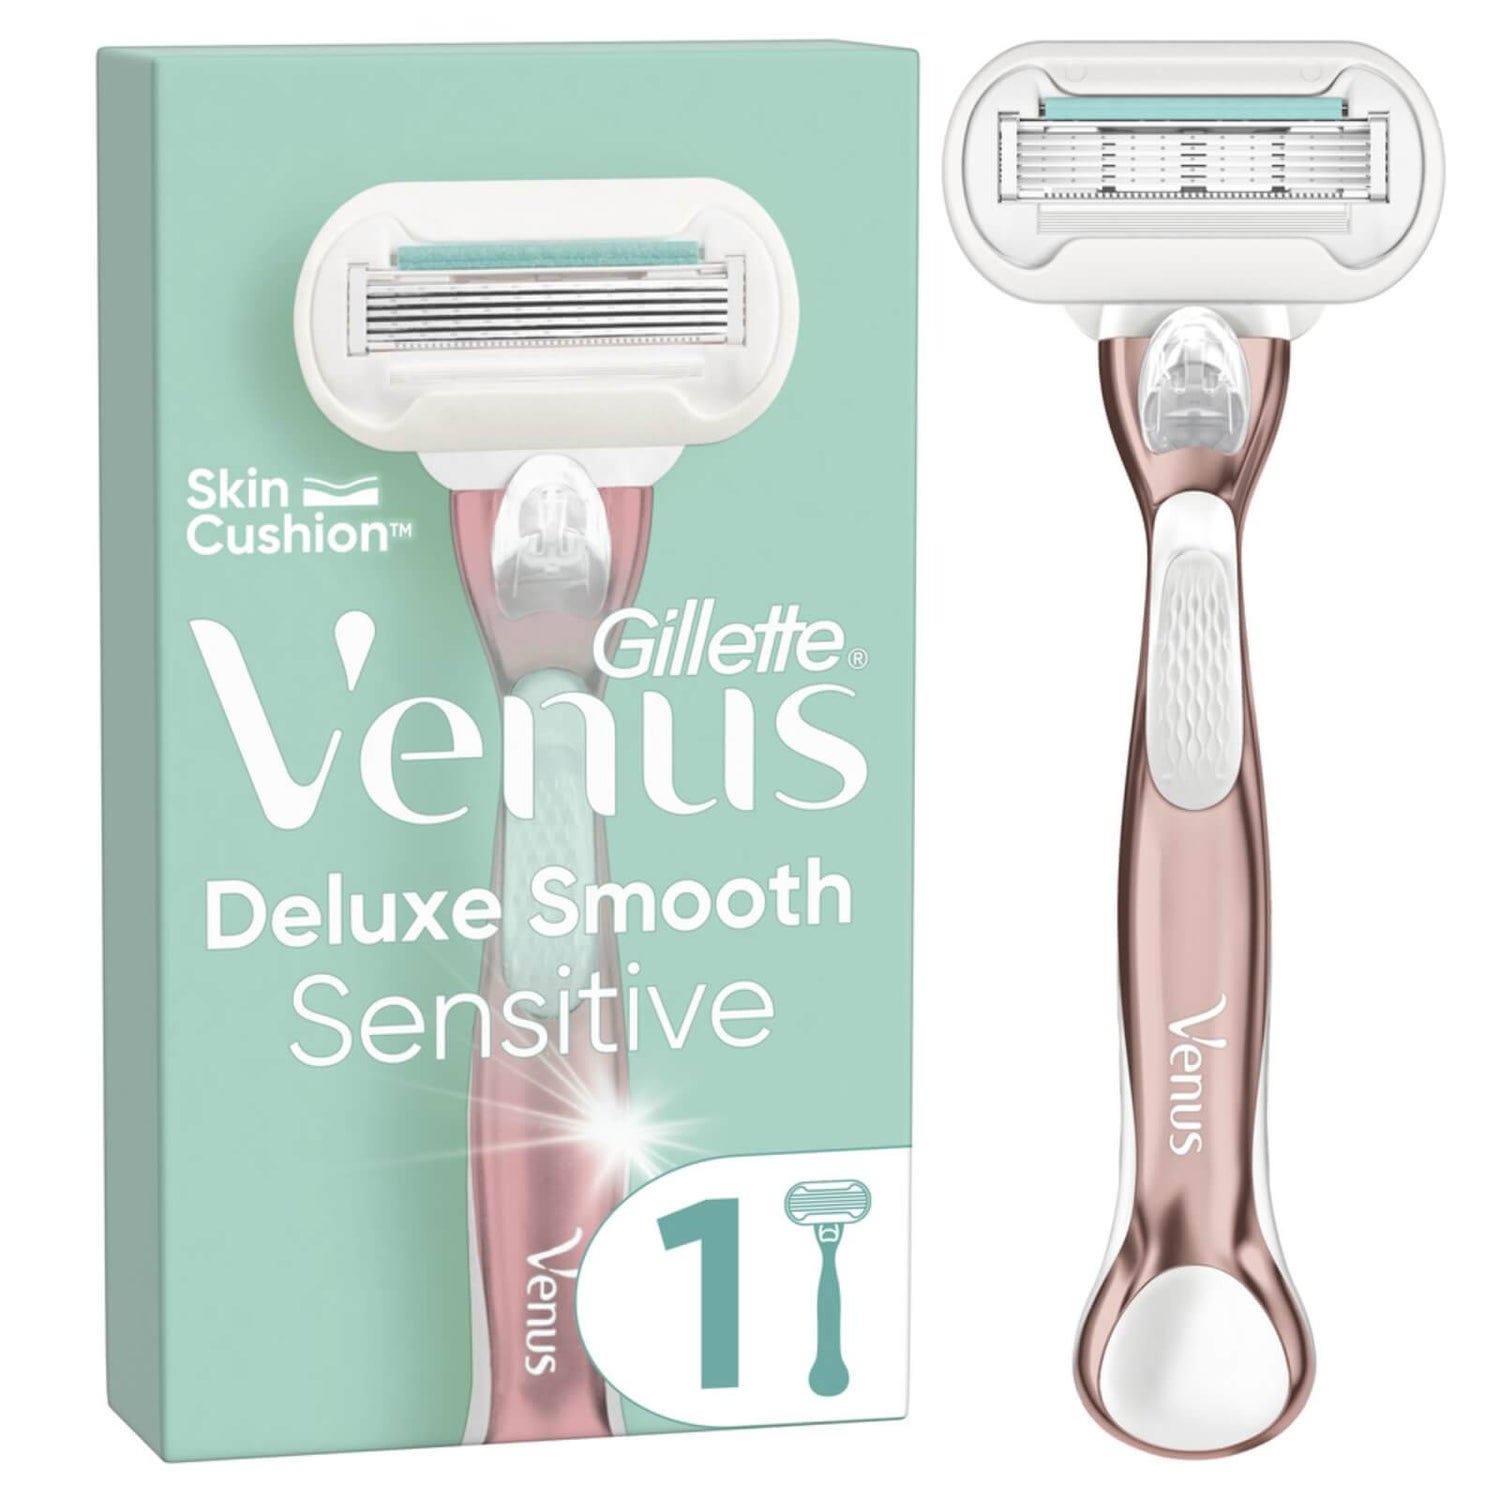 Venus Deluxe Smooth Sensitive 玫瑰金剃須刀